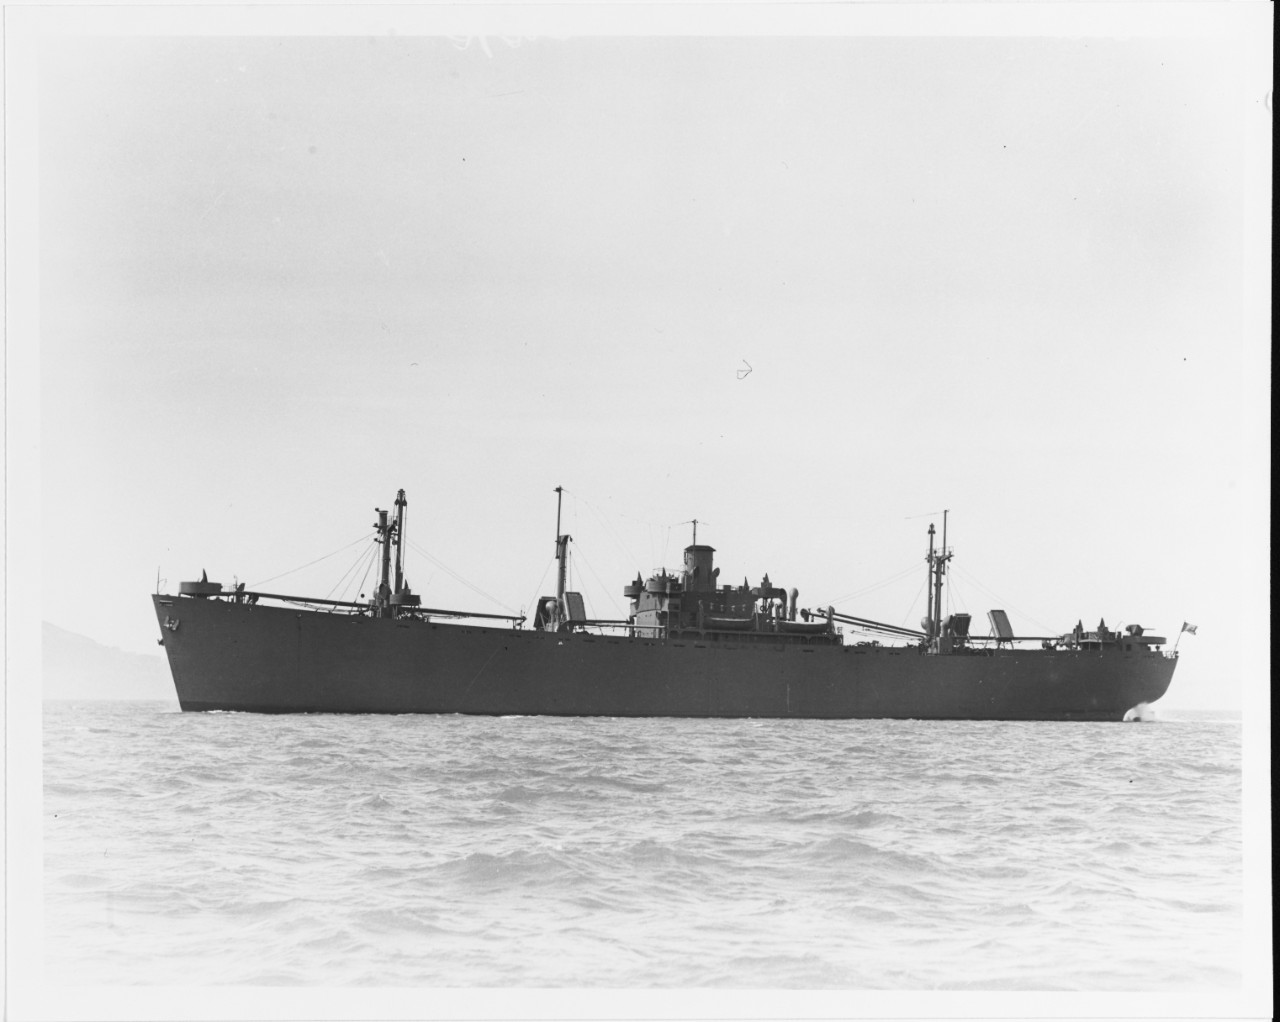 S.S. NOVOROSSISK (U.S.S.R. Merchant Cargo Ship, 1943-1974)